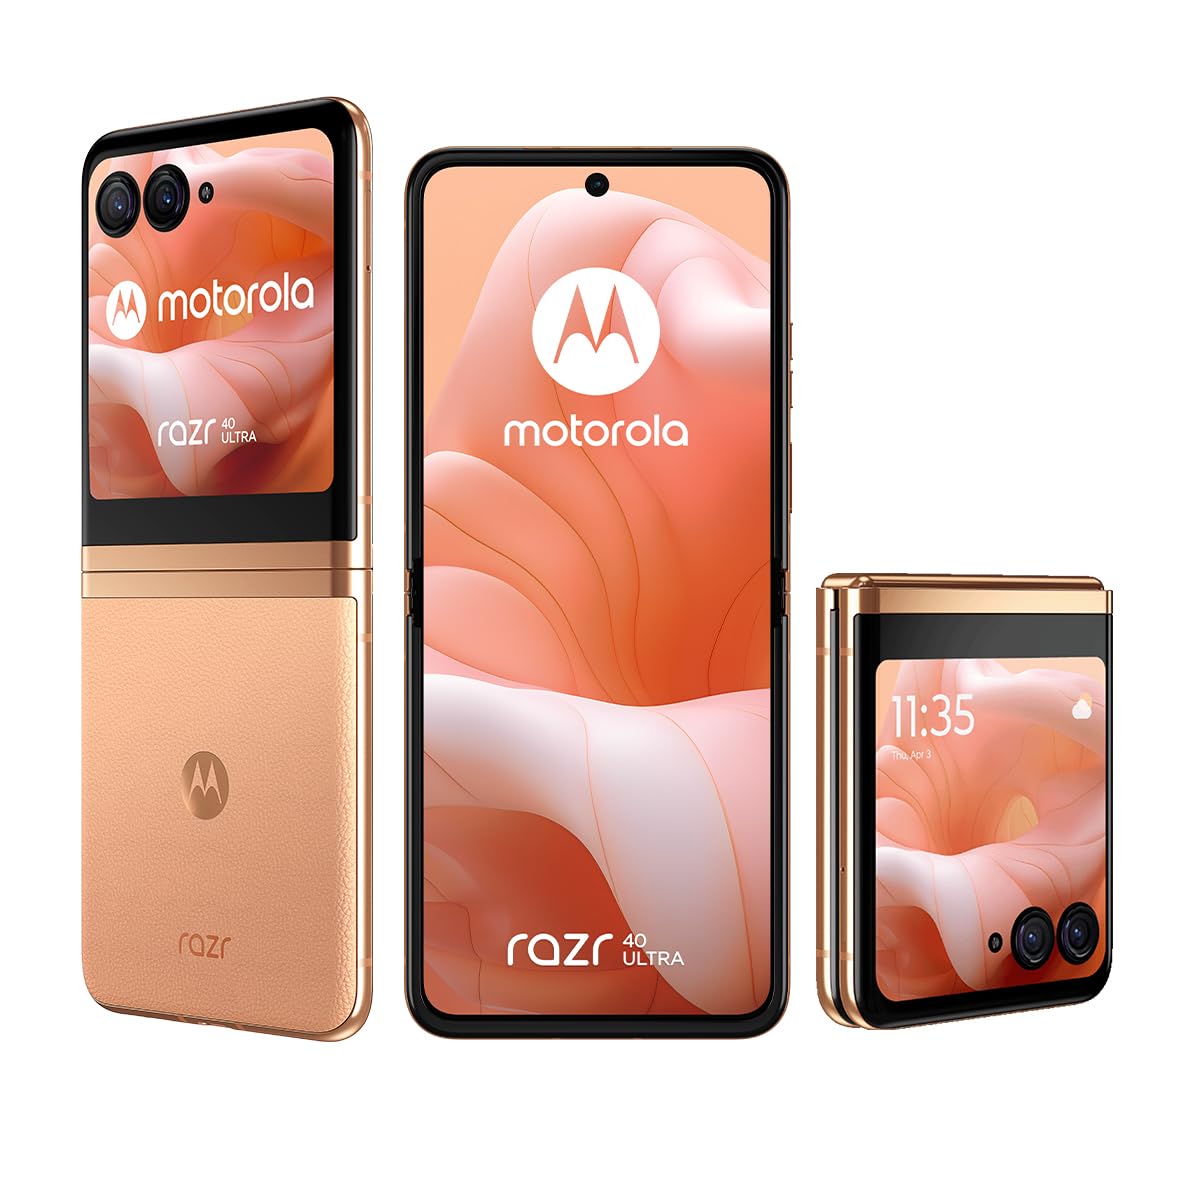 Motorola Razr 40 Ultra now available in Peach Fuzz color on Amazon India